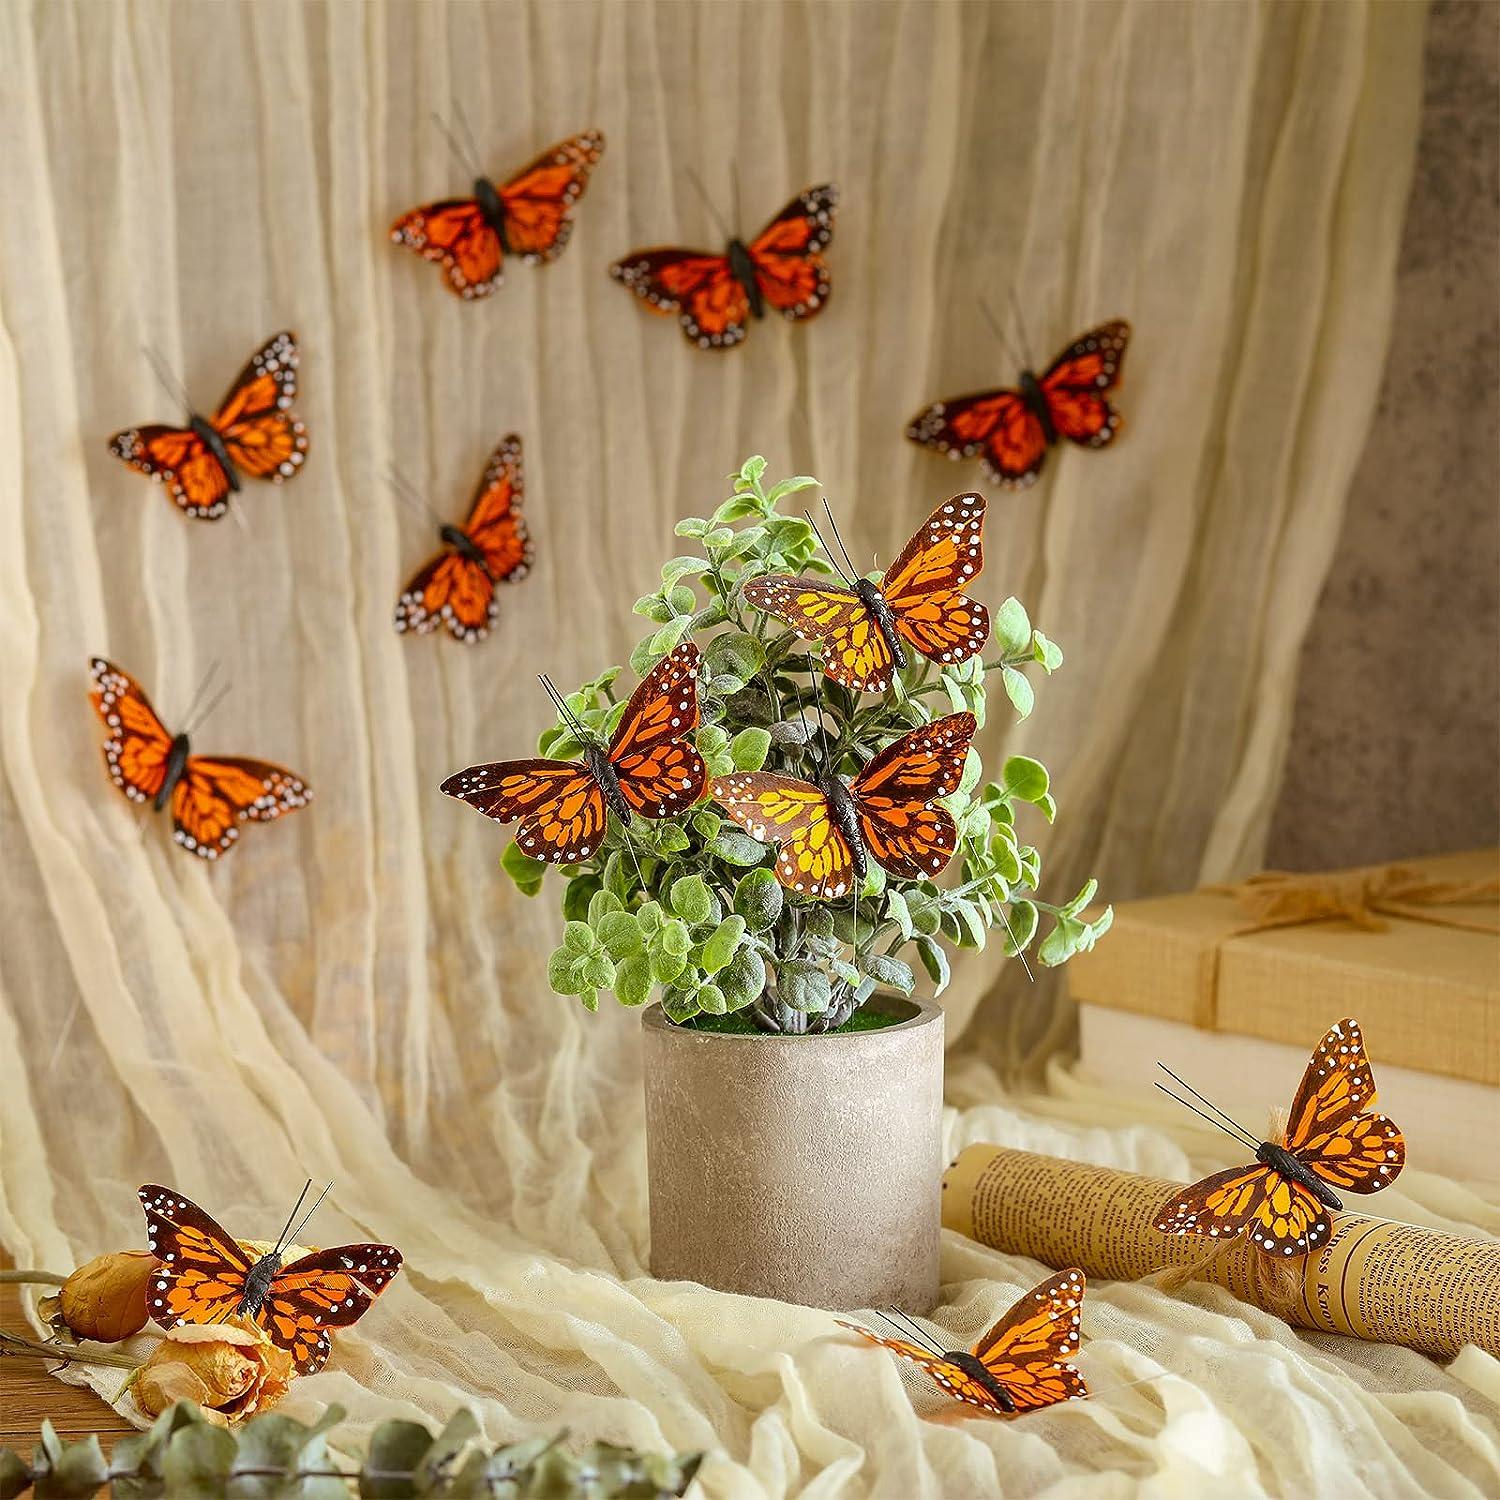 12 Set Monarch Butterfly Decorations Feather Butterflies Picks